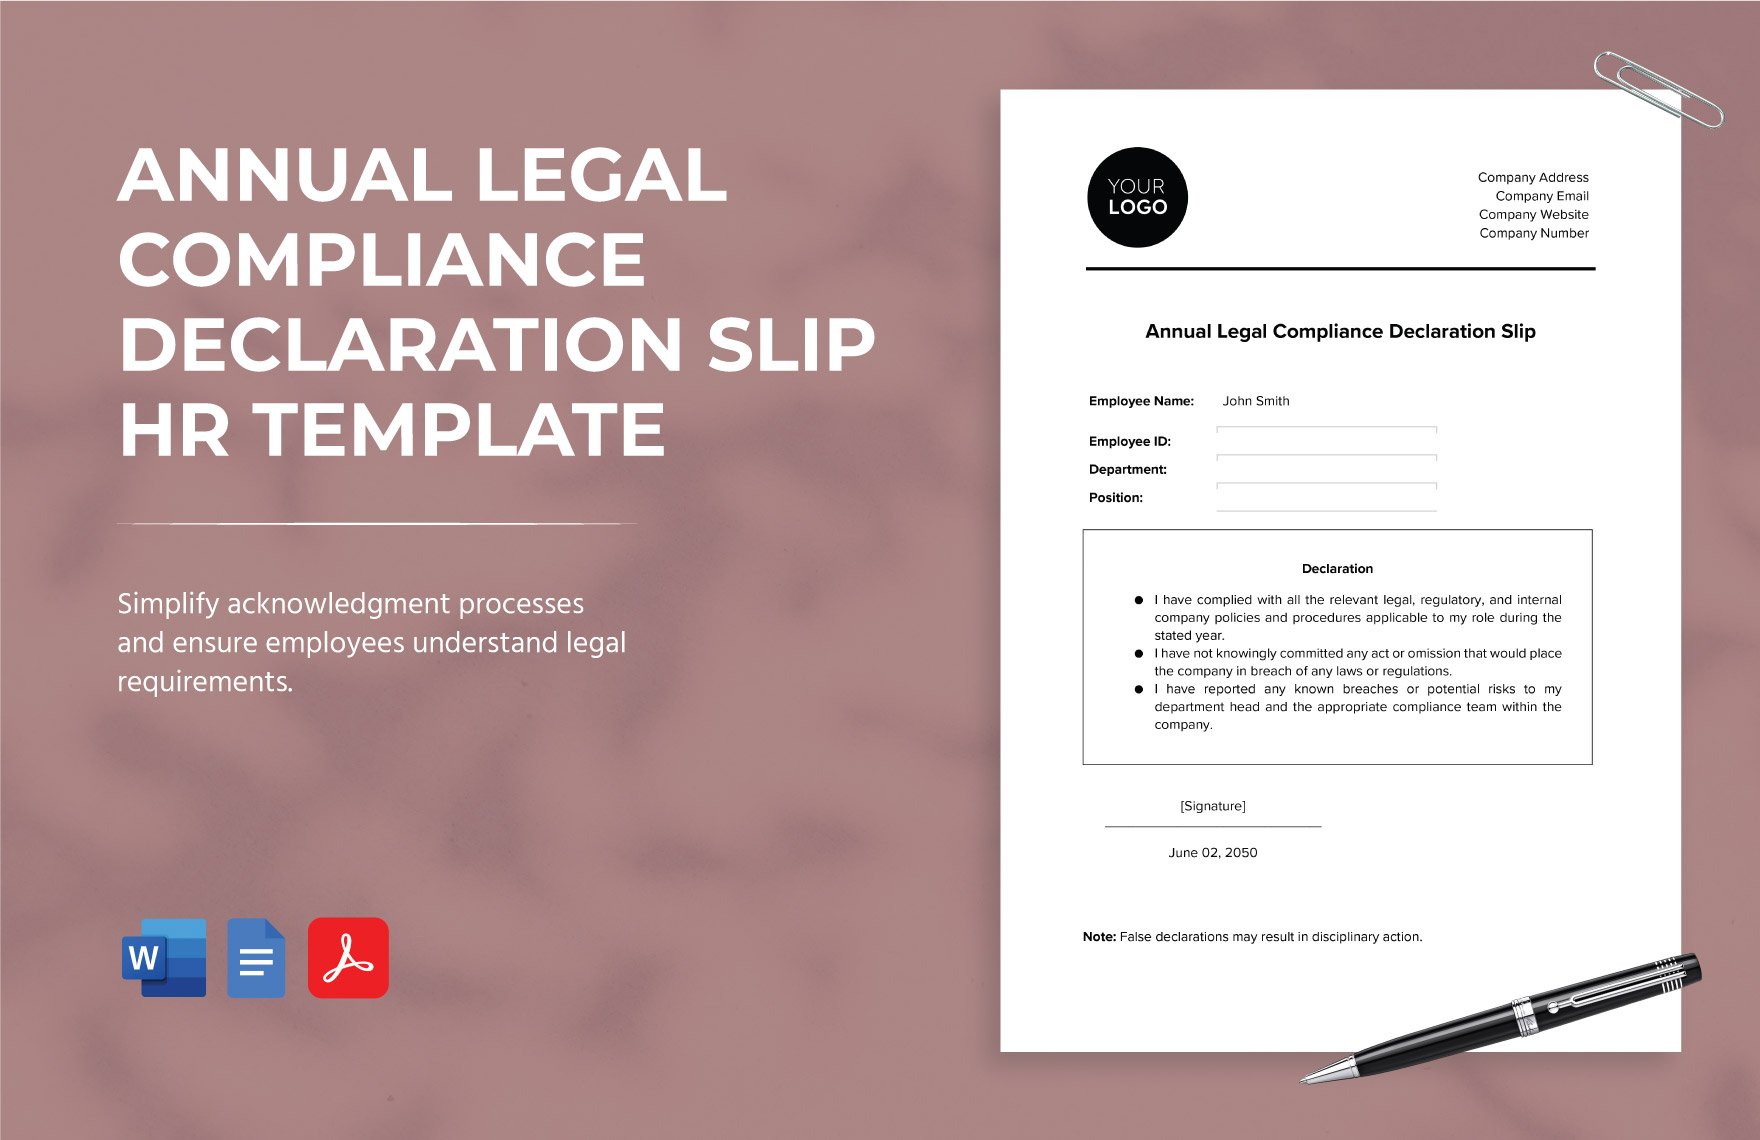 Annual Legal Compliance Declaration Slip HR Template in Word, Google Docs, PDF